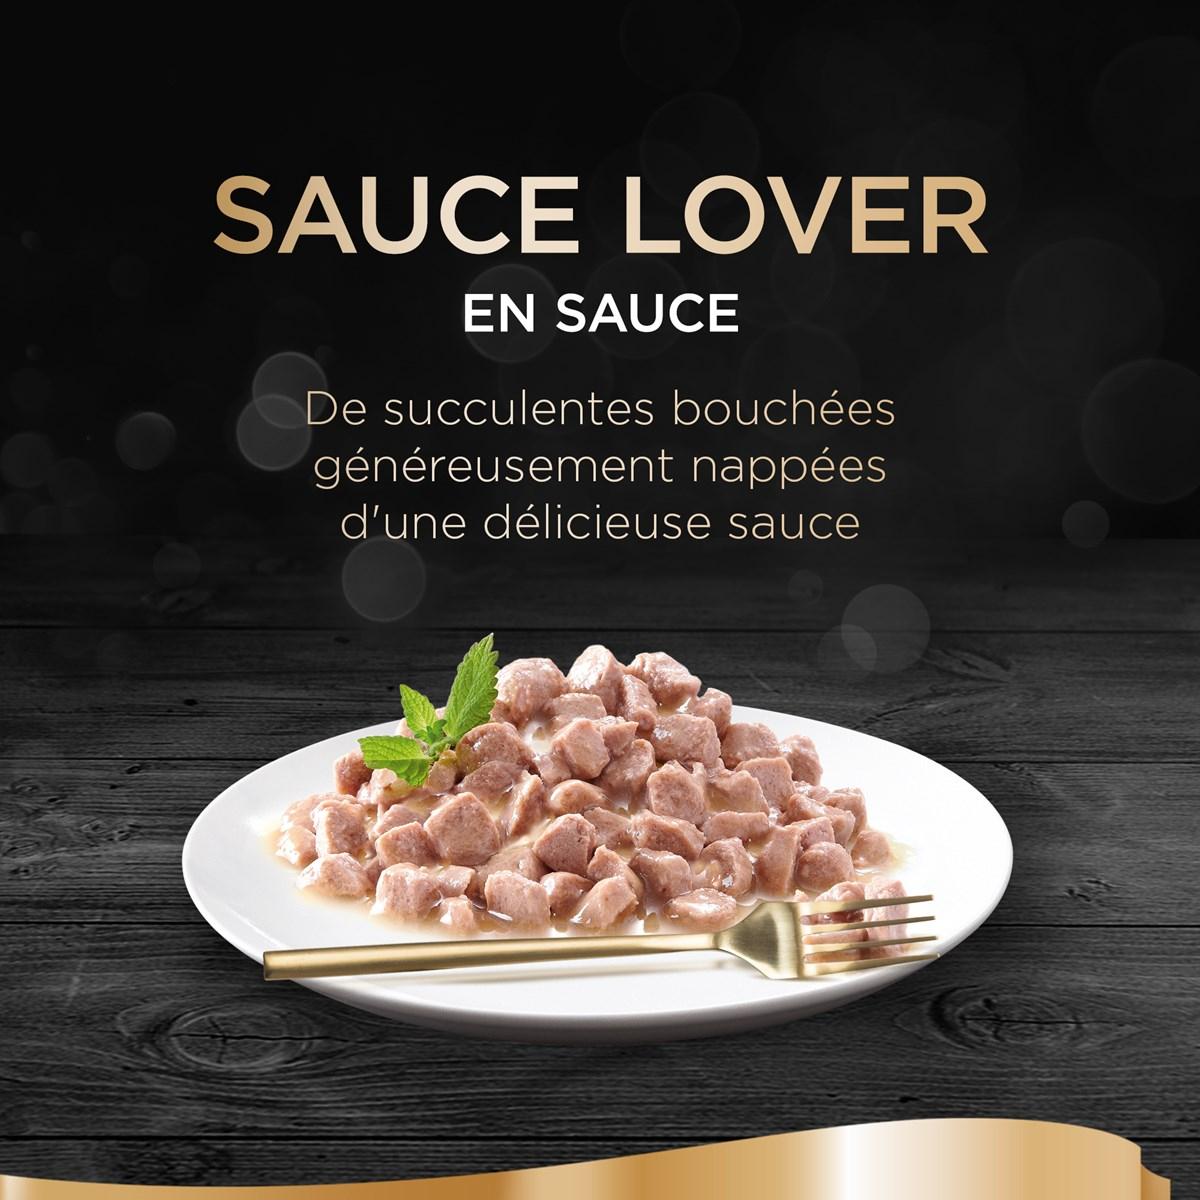 SHEBA Sauce Lover 72 Barquettes coffret terre & mer sauce pour chat 85g (6x12)